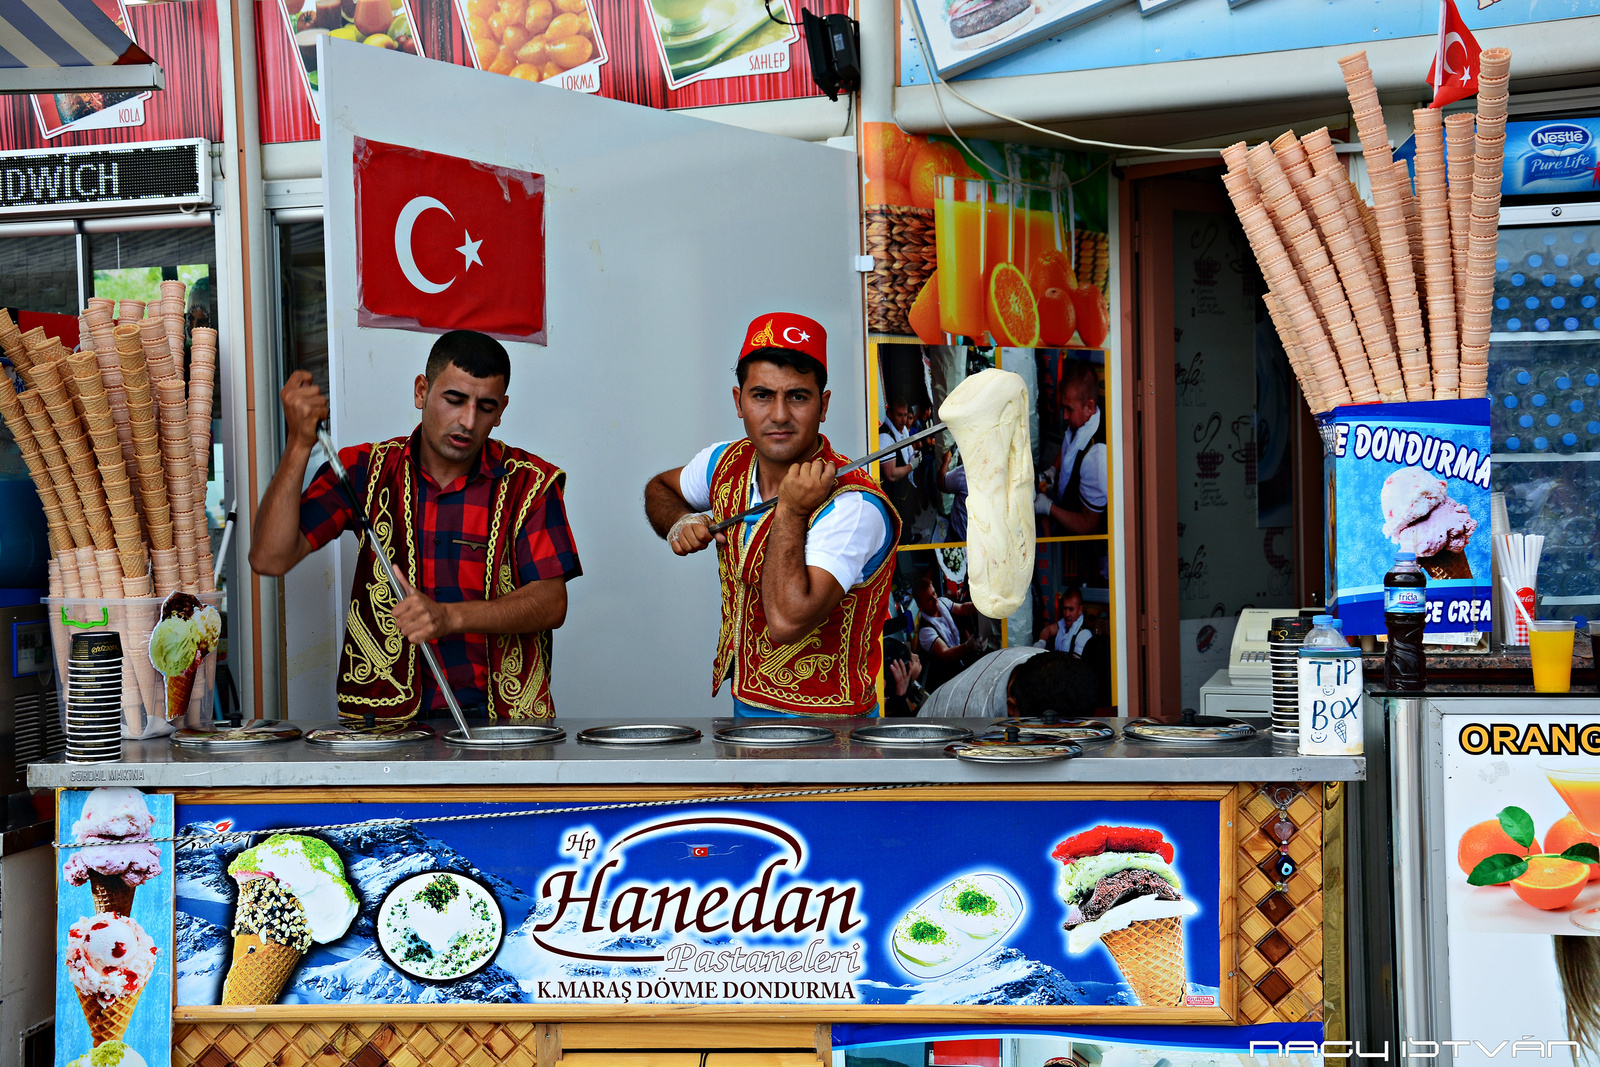 Pamukkale - Turkey 2015 1142